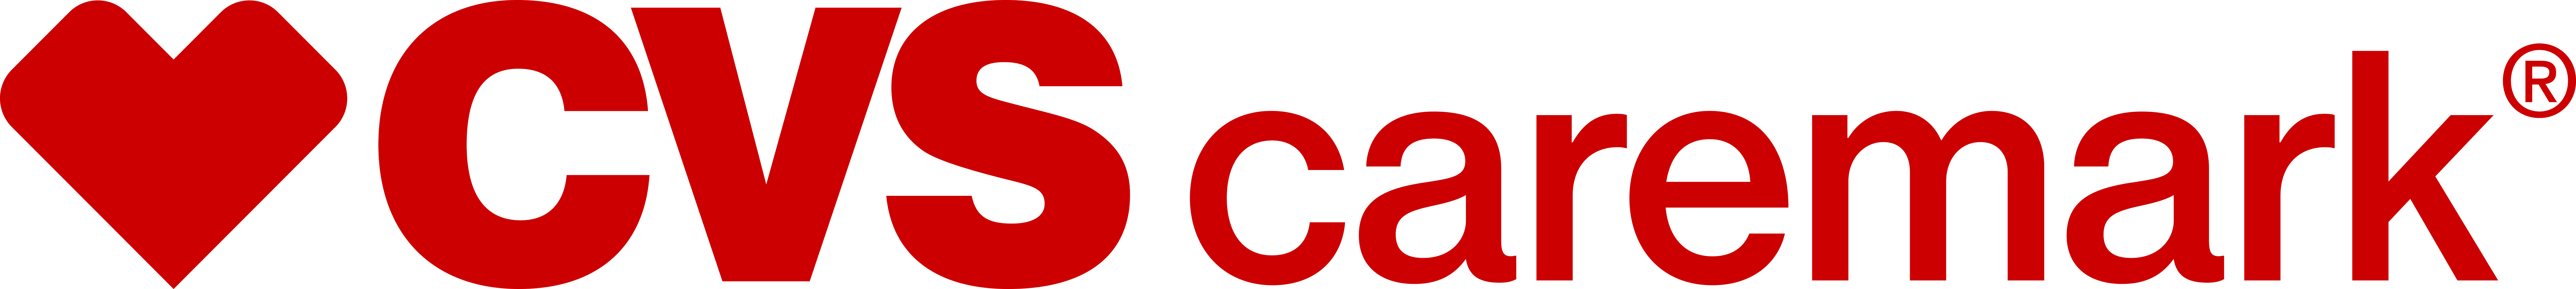 cvs-caremark-logo | RxBenefits